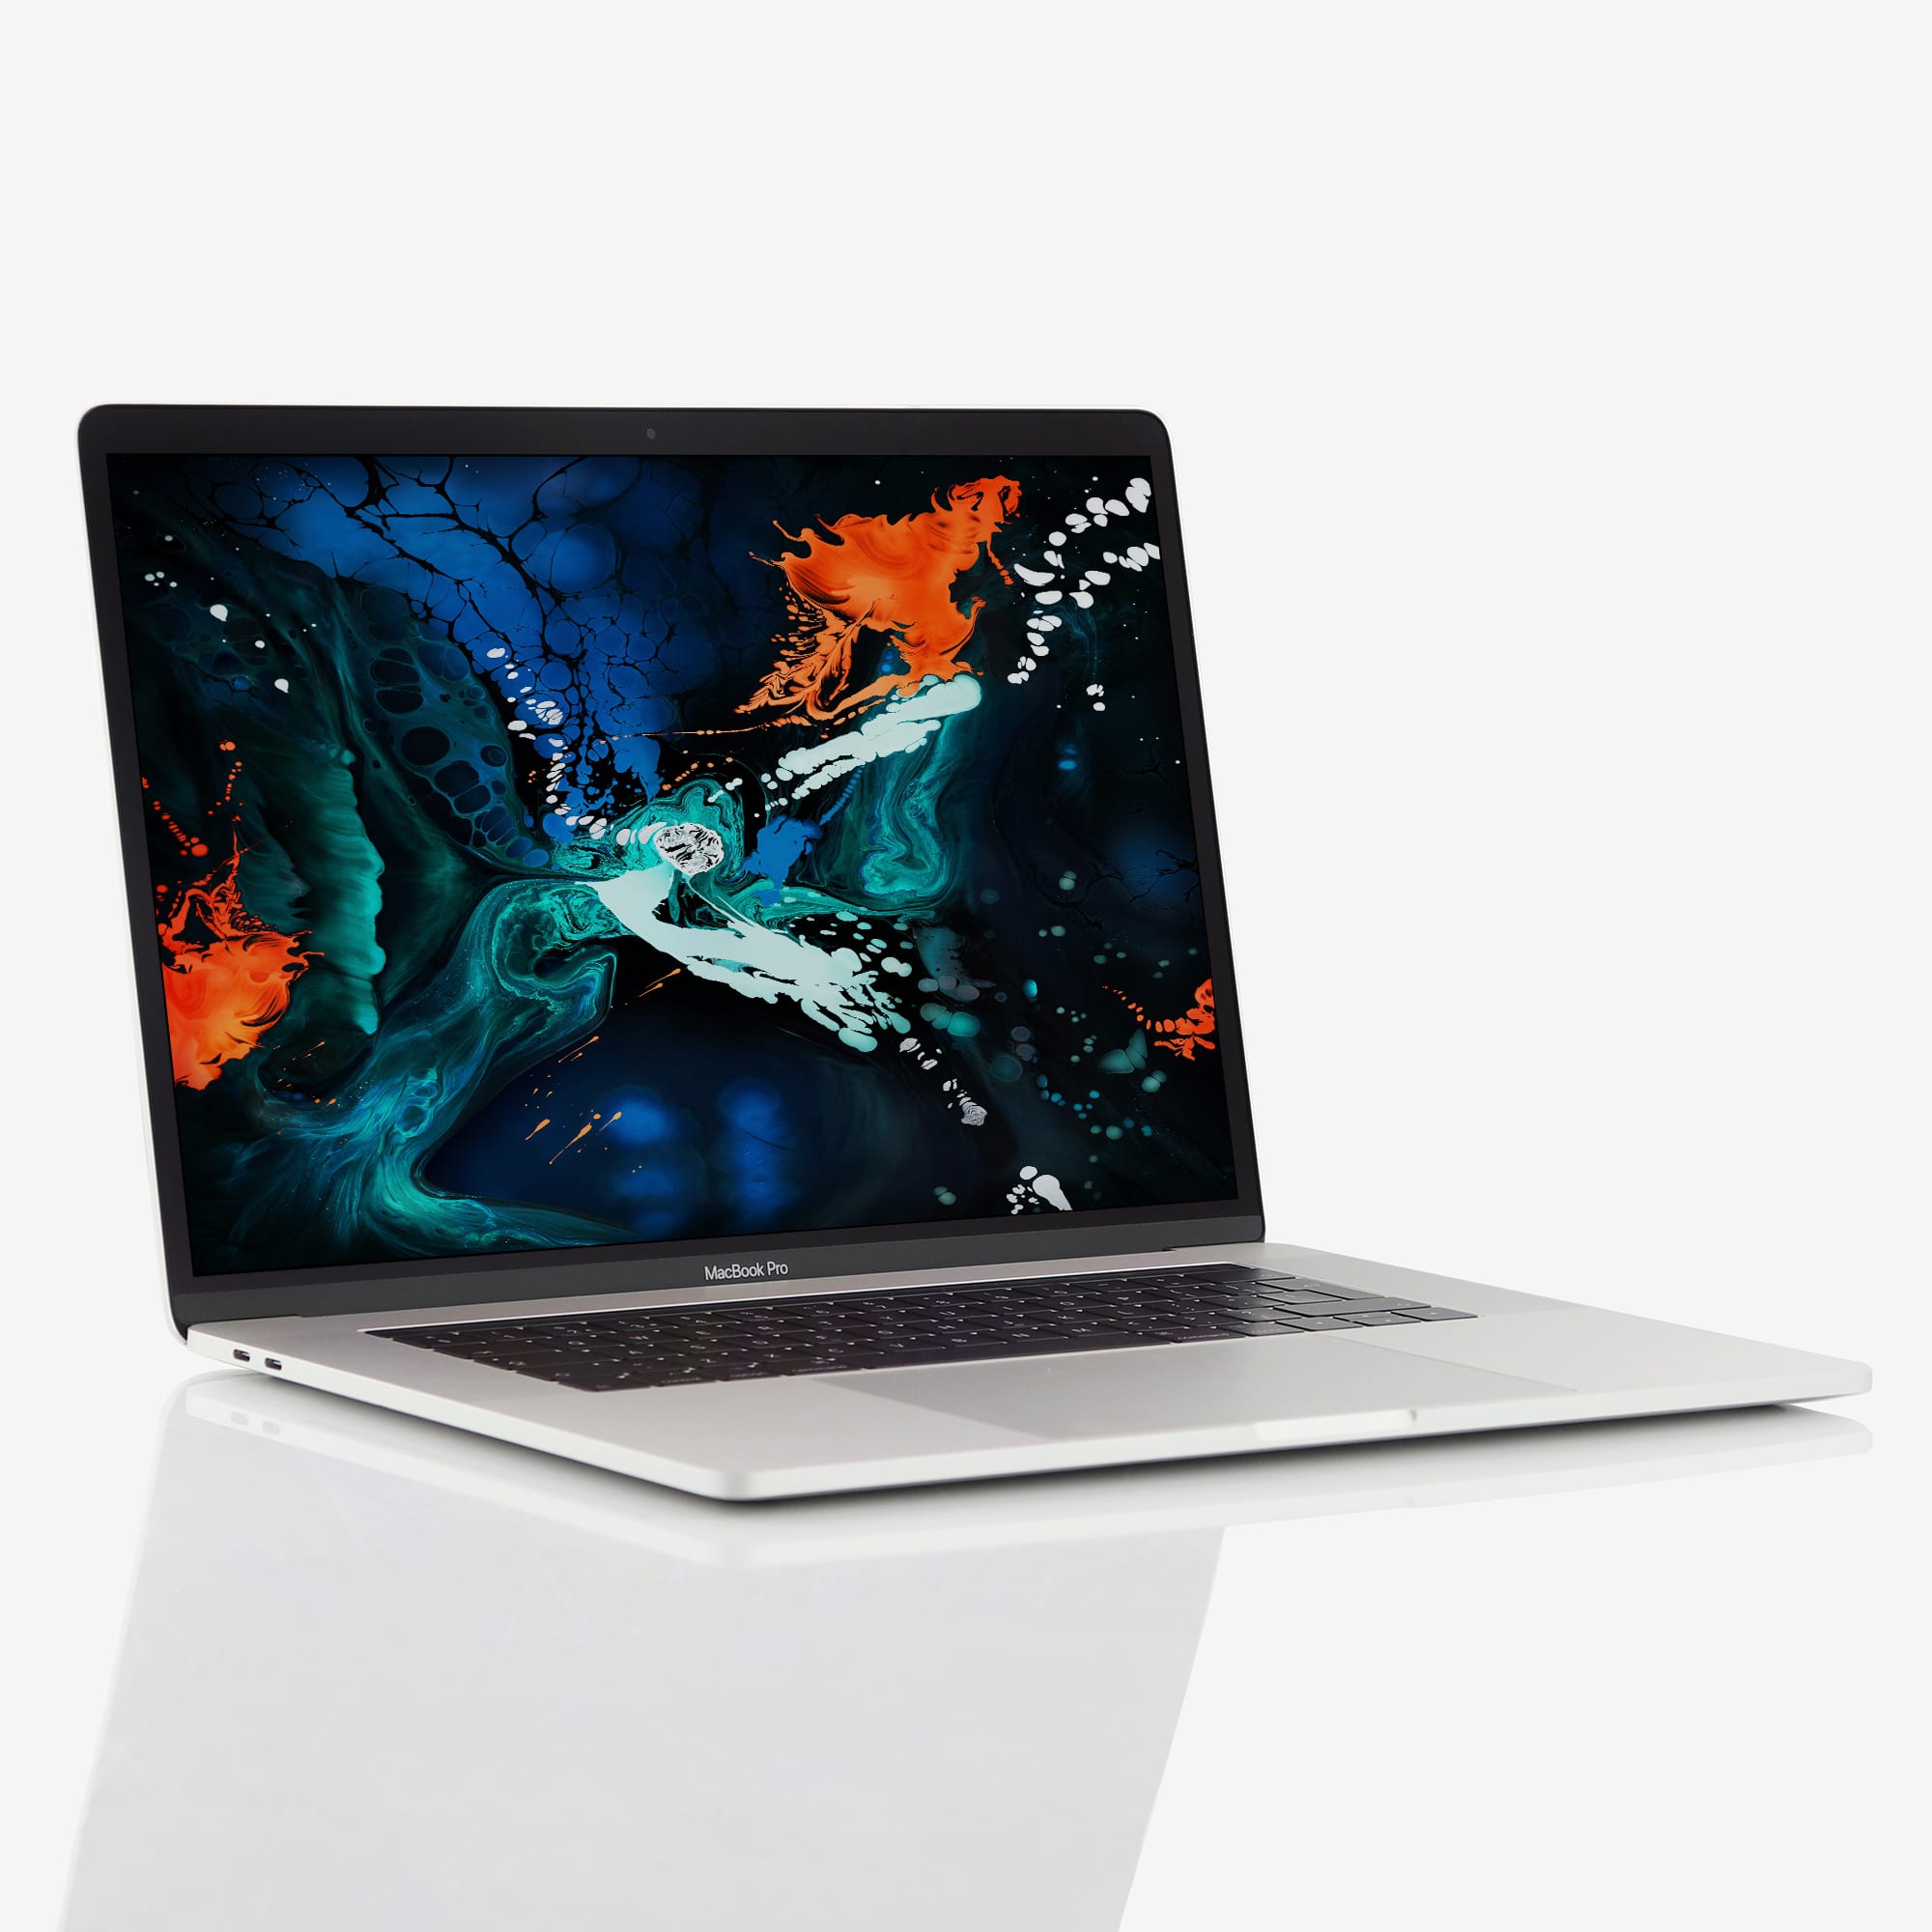 1 x Apple MacBook Pro Retina 15 Inch Touchbar Intel Core i7 2.70 GHz (2016)